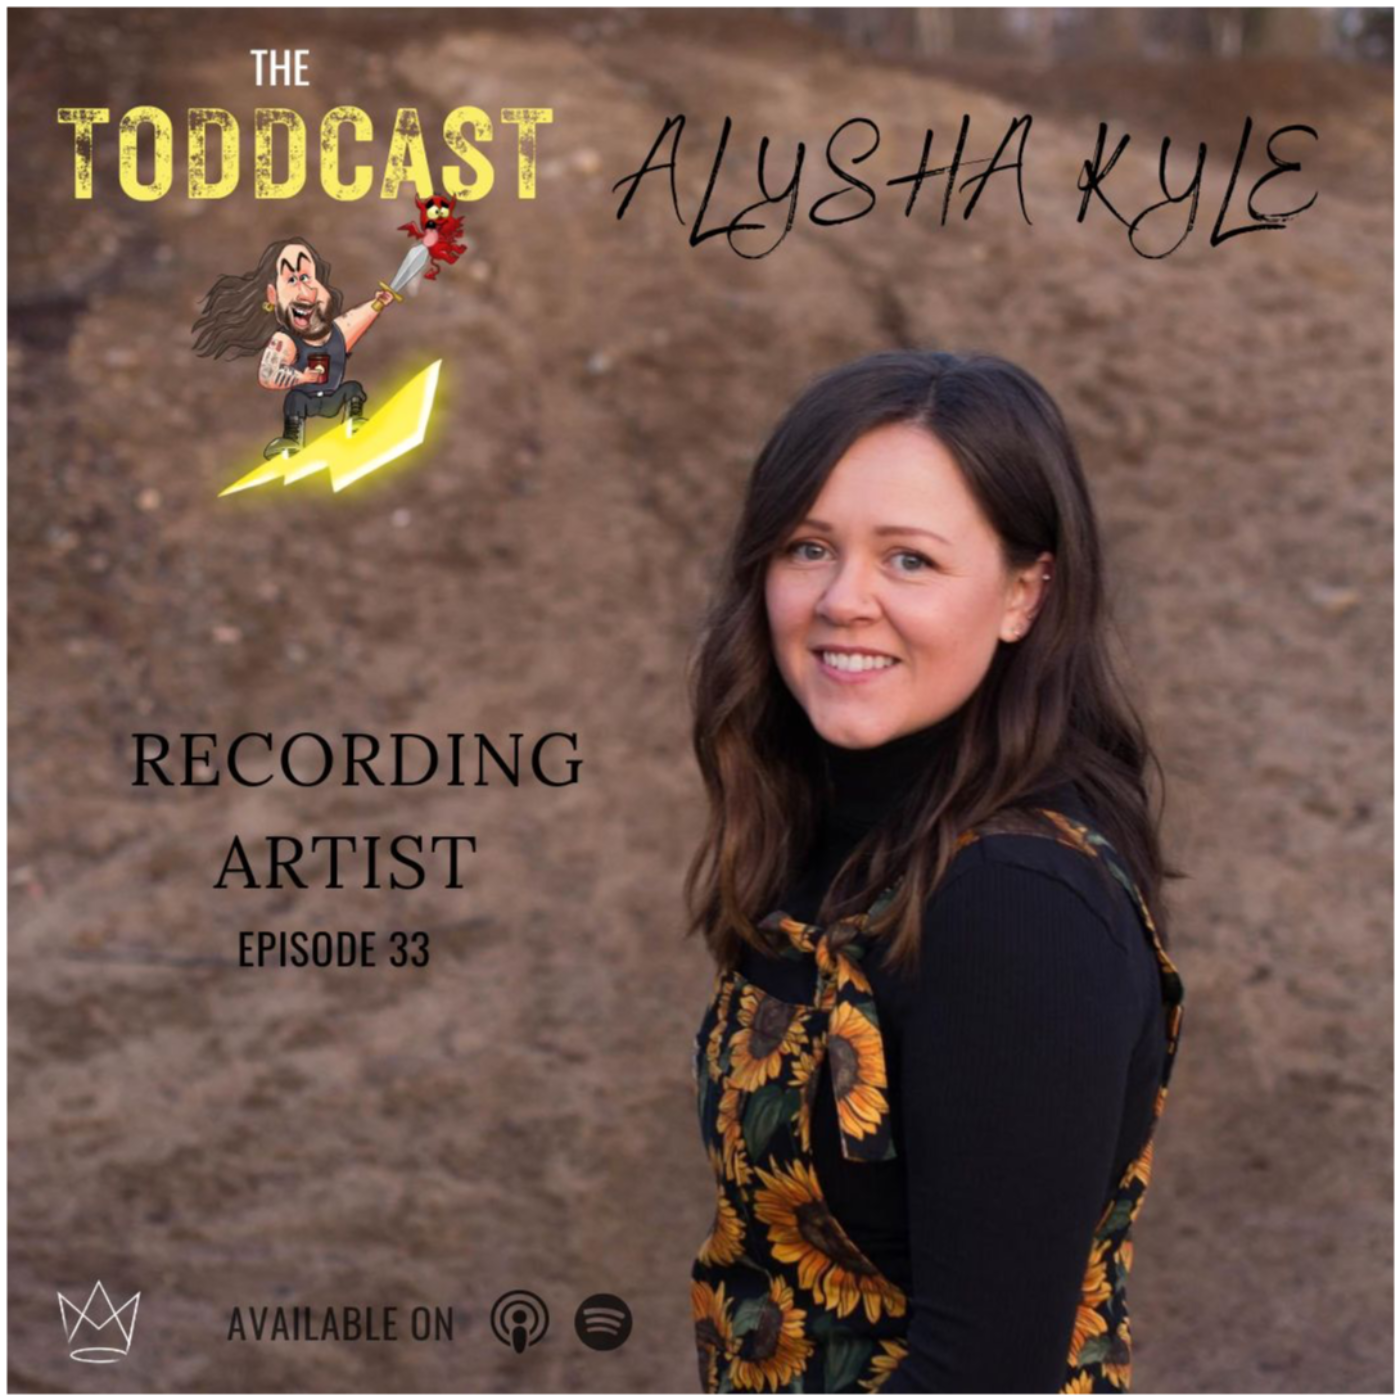 The Toddcast - Alysha Kyle (Recording Artist)